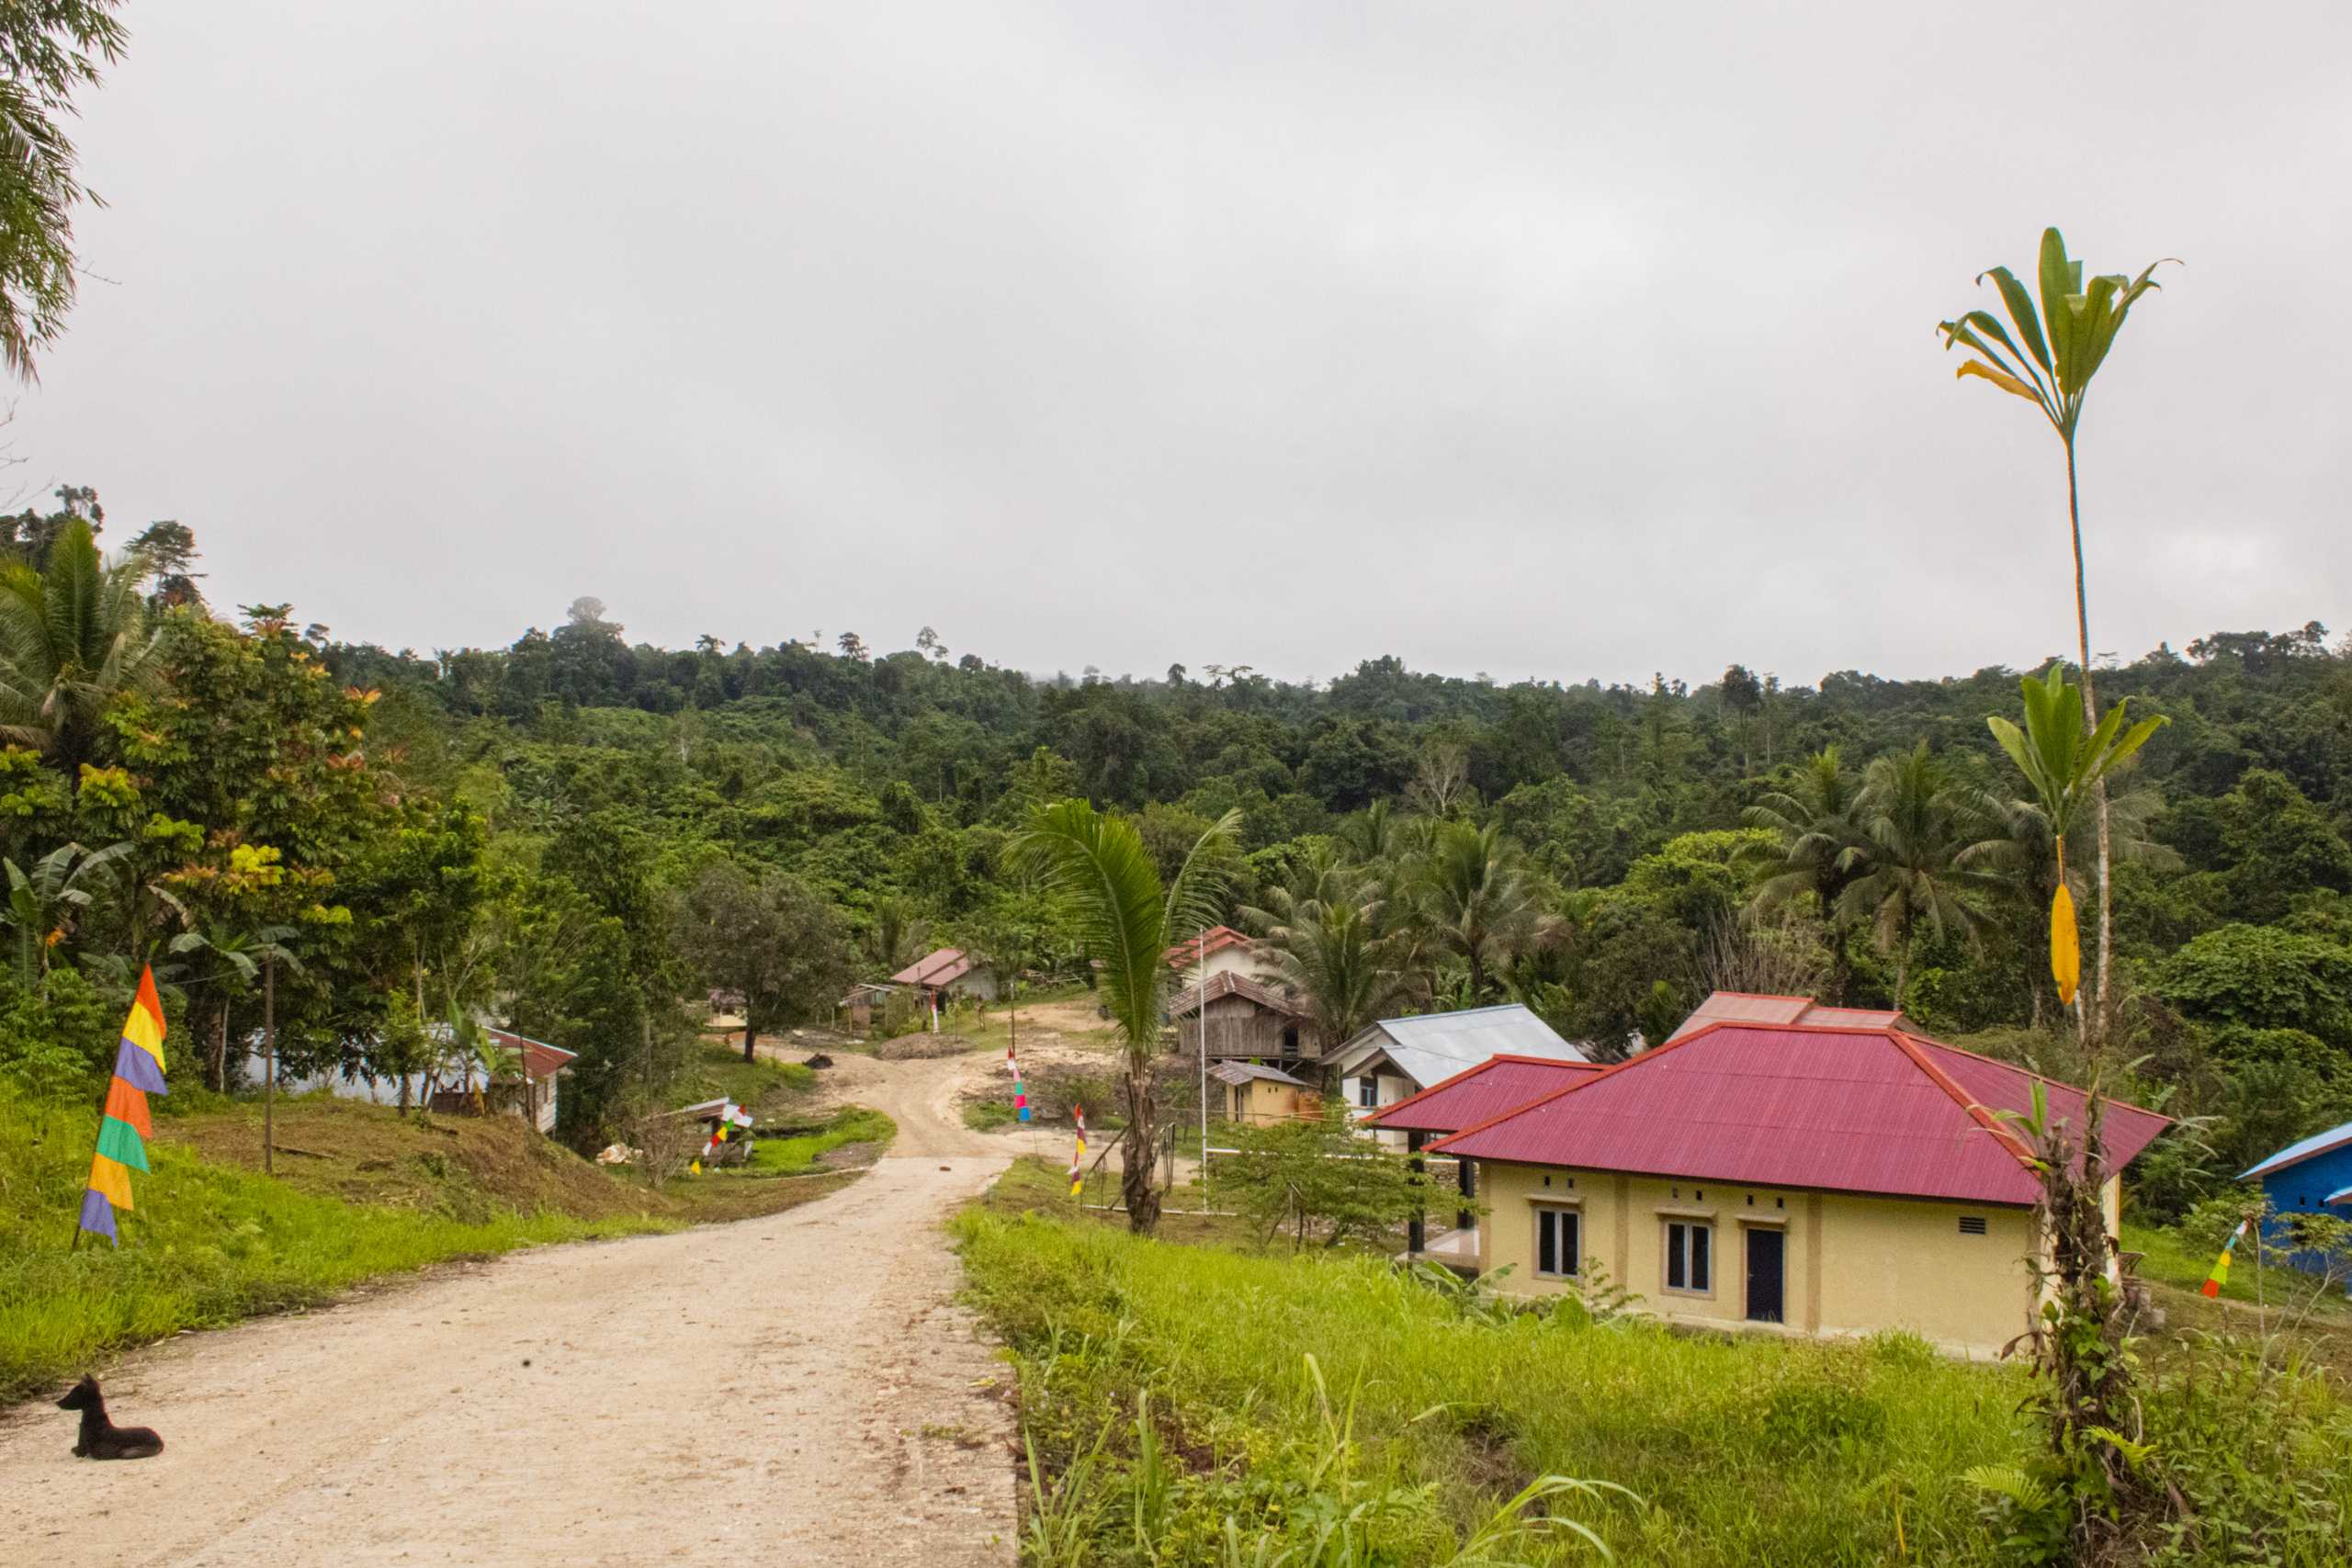 A view of Tarsa village